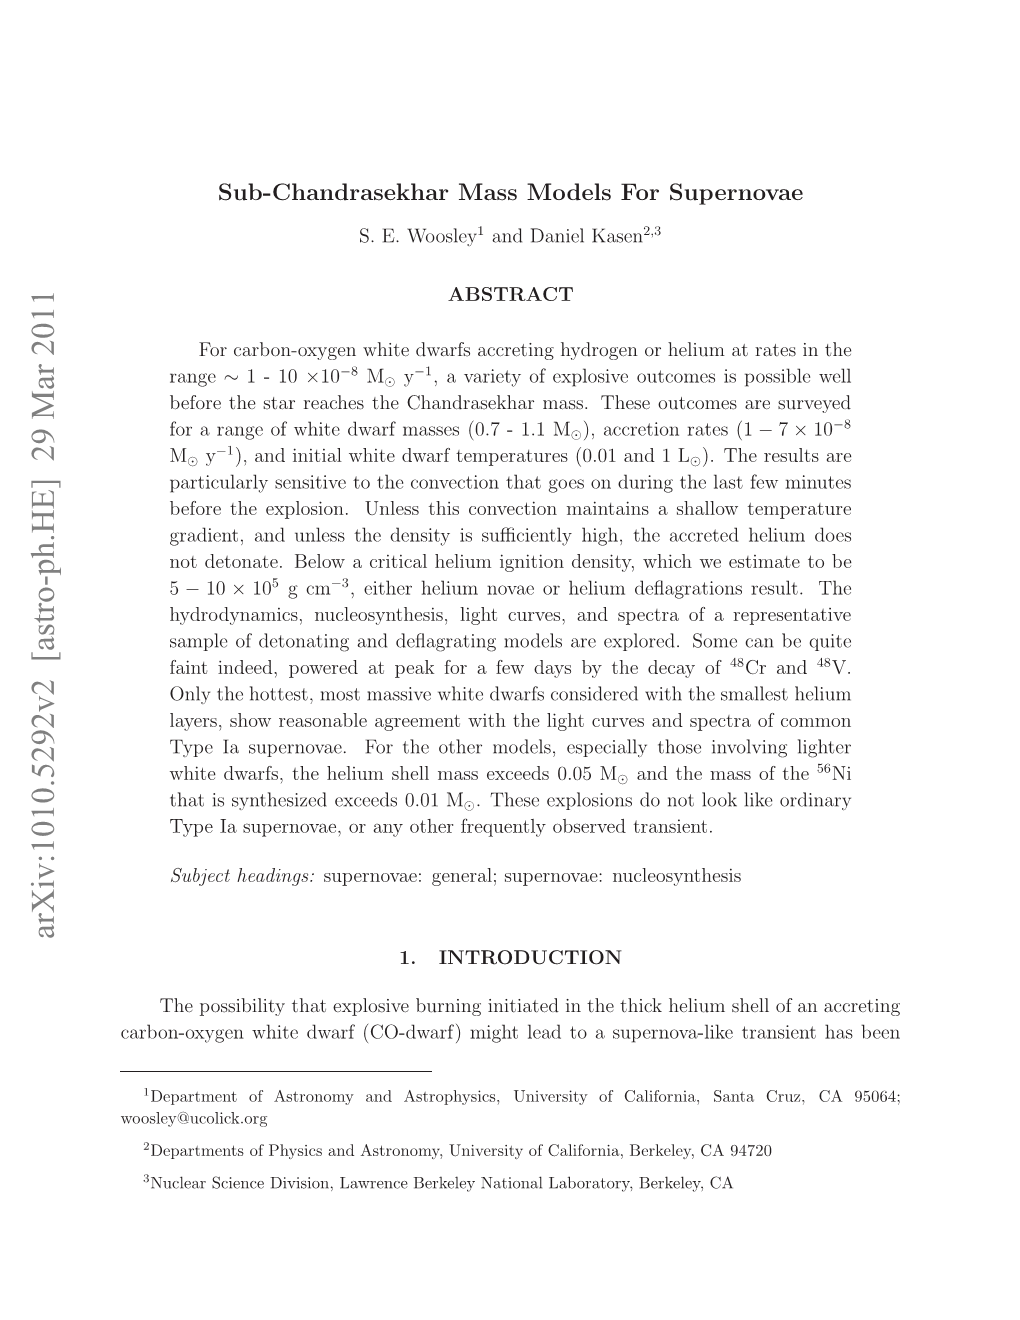 Sub-Chandrasekhar Mass Models for Type Ia Supernovae